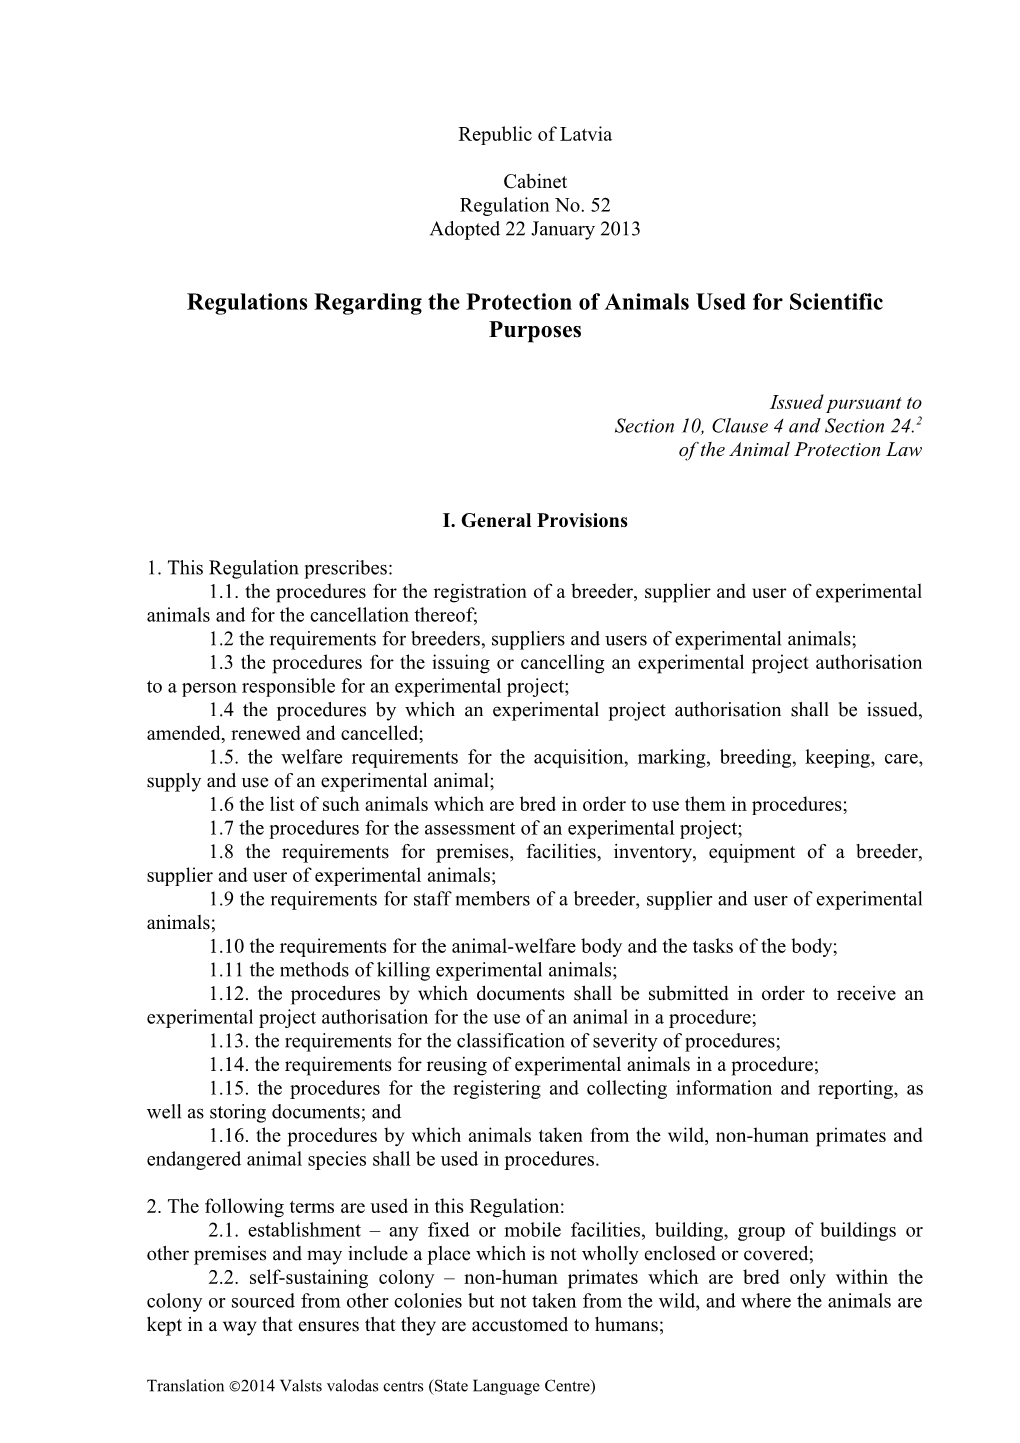 Regulations Regarding the Protection of Animals Used for Scientific Purposes